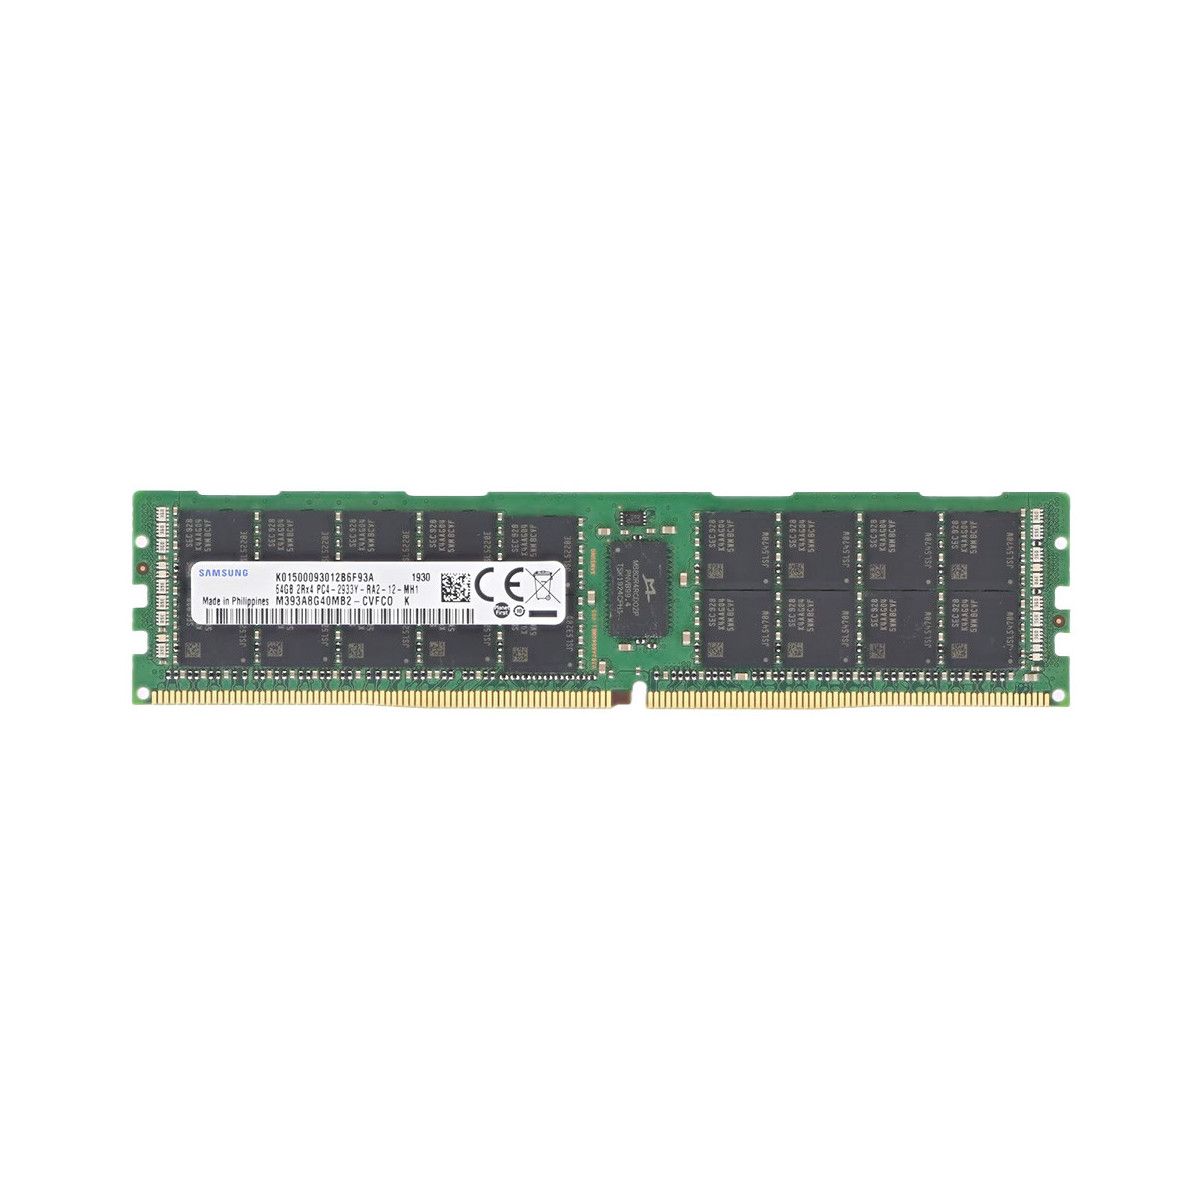 AA601615-MS - Memstar 1x 64GB DDR4-2933 RDIMM PC4-23466U-R - Mem-Star Compatible OEM Memory 1 - Memstar 